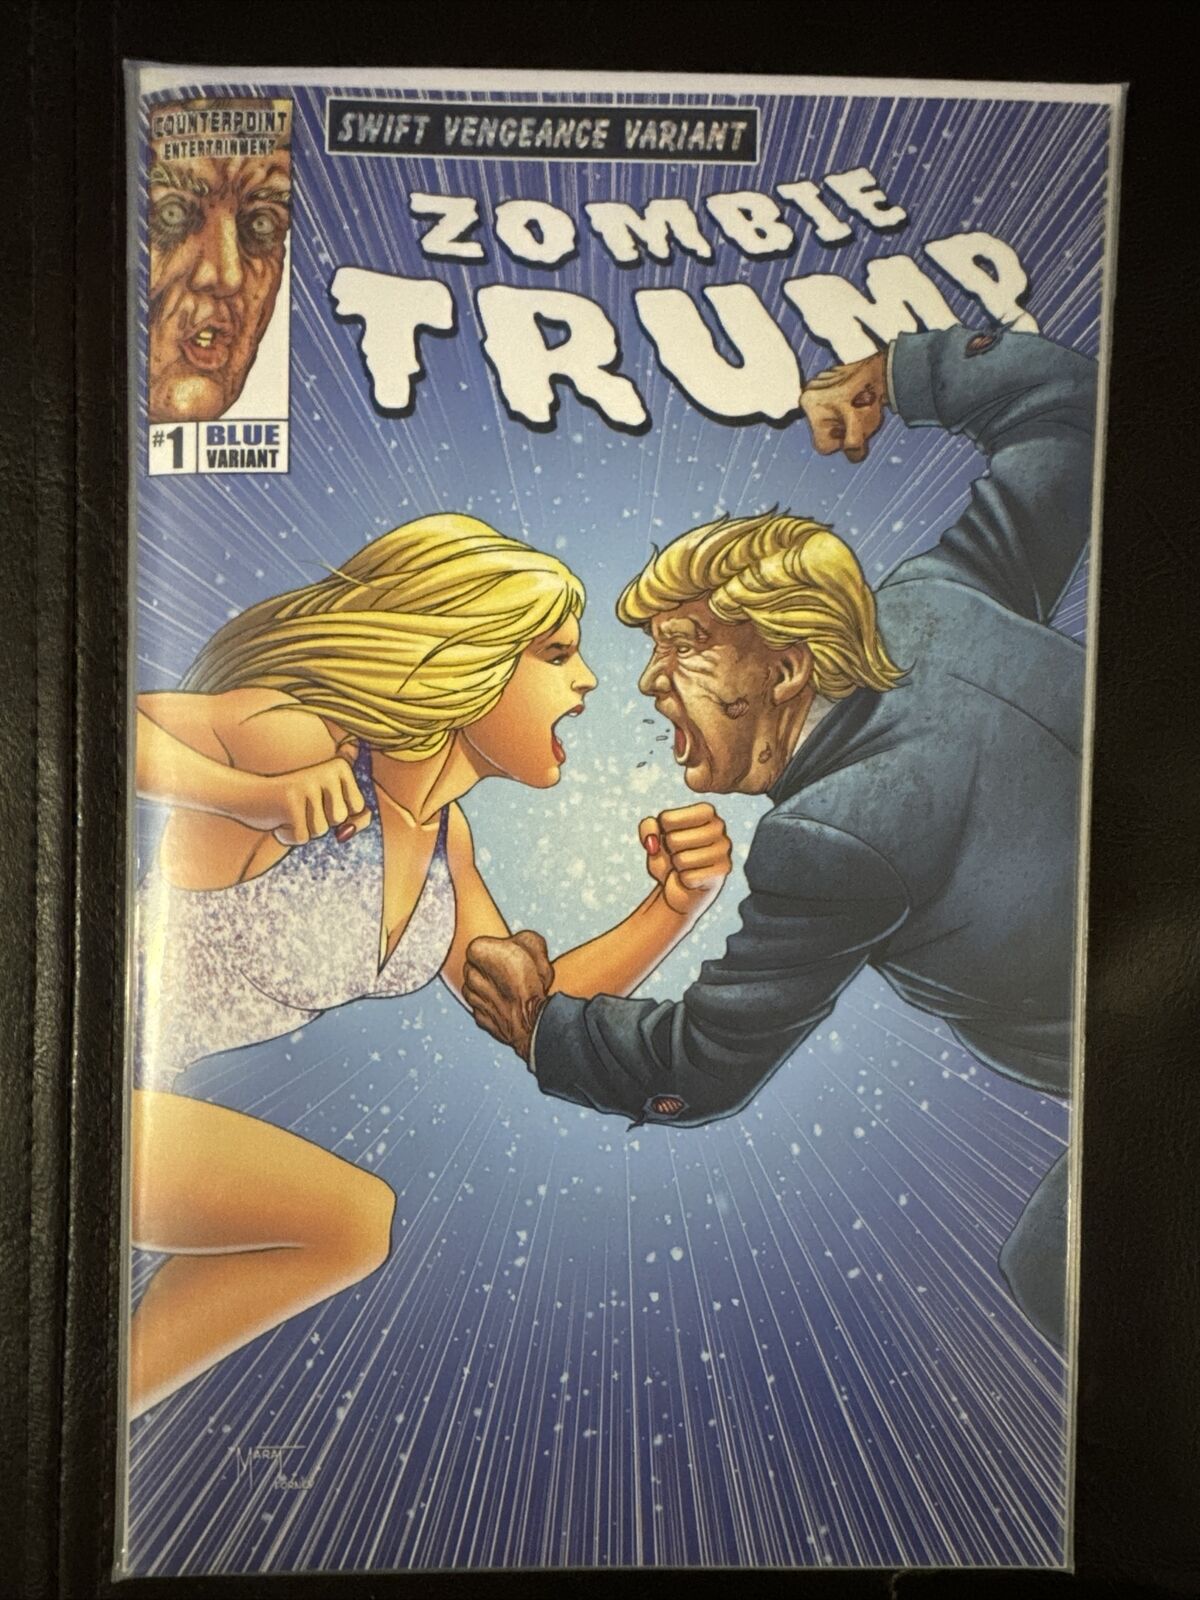 Zombie Trump. Swift Vengeance Variant. Blue Cover